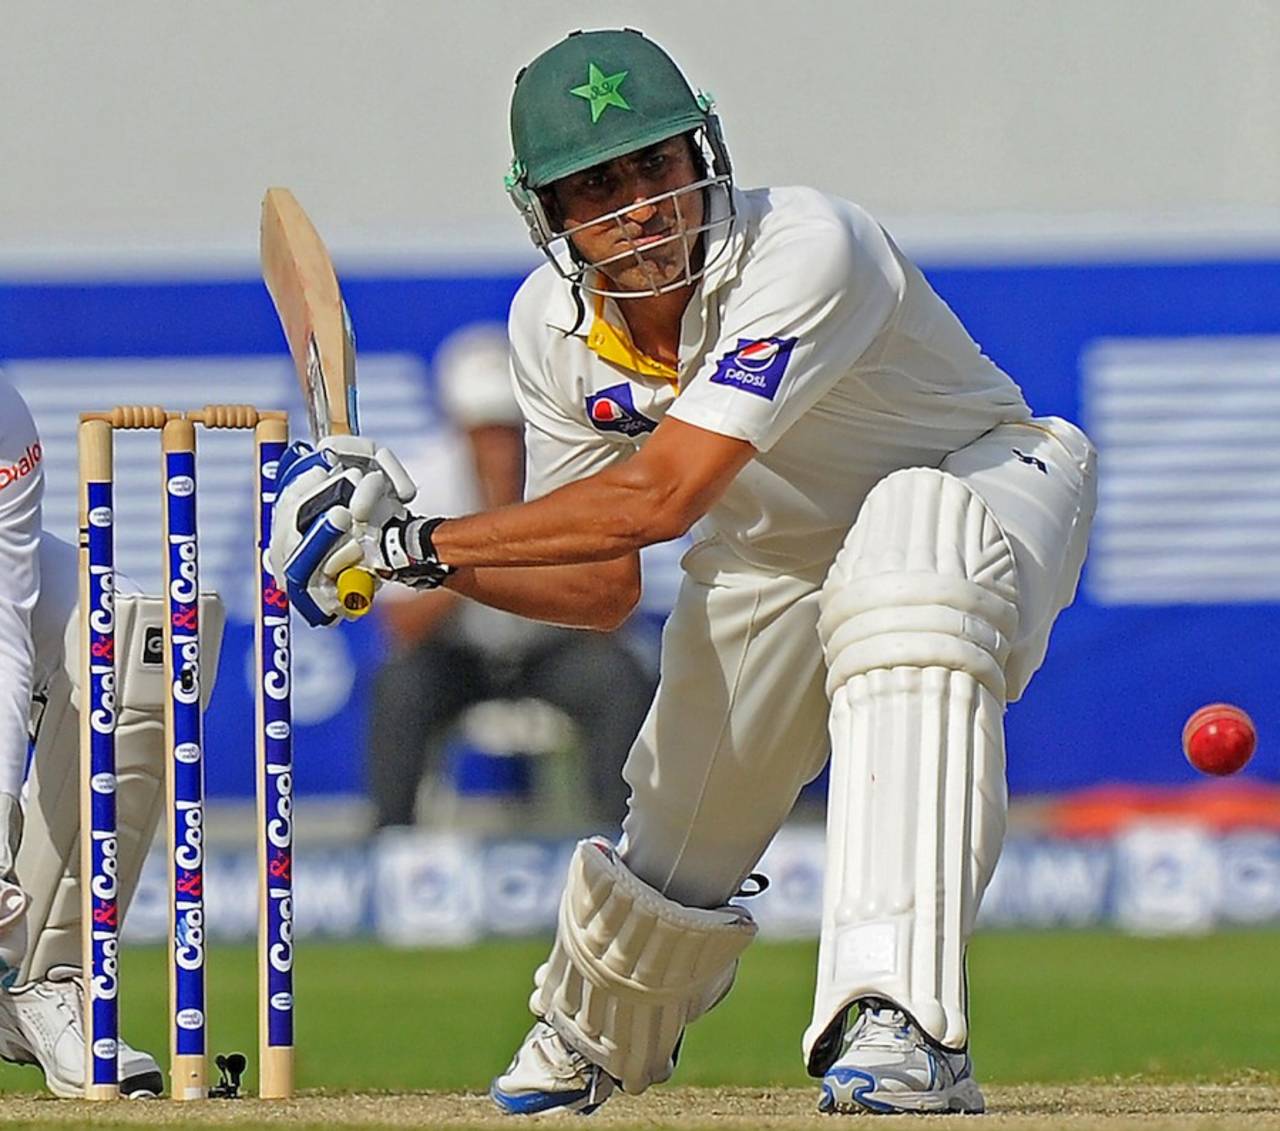 Younis Khan winds up to hit the ball, Pakistan v Sri Lanka, 2nd Test, Dubai, 3rd day, January 10, 2014